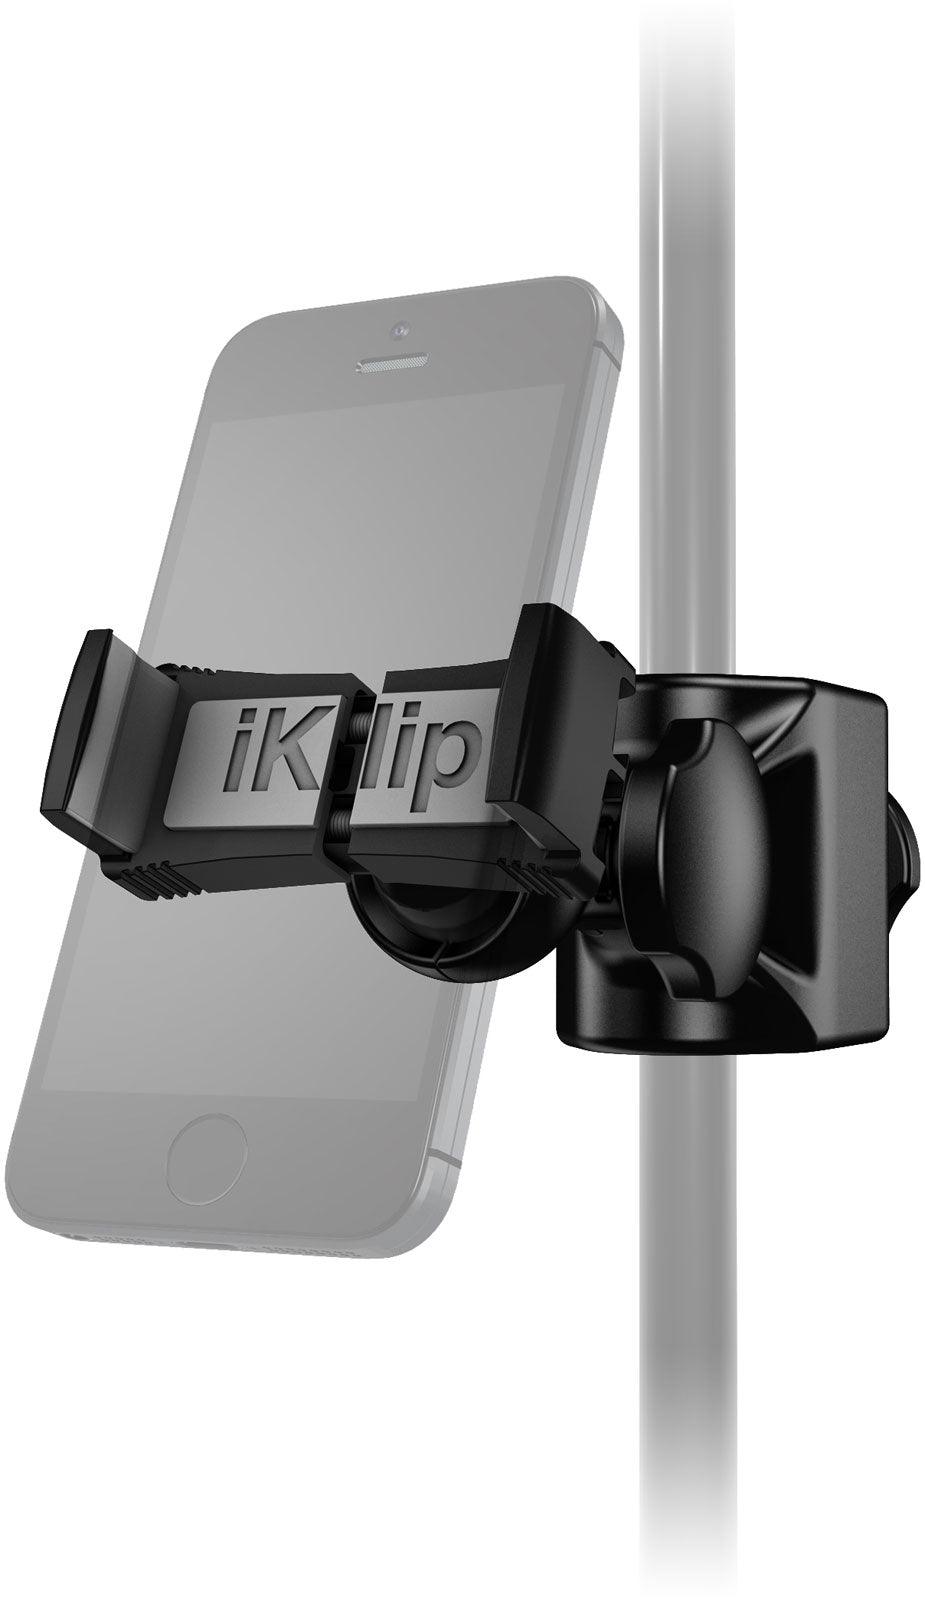 Soporte Ik Iklip Xpand Mini Para Smartphones - The Music Site